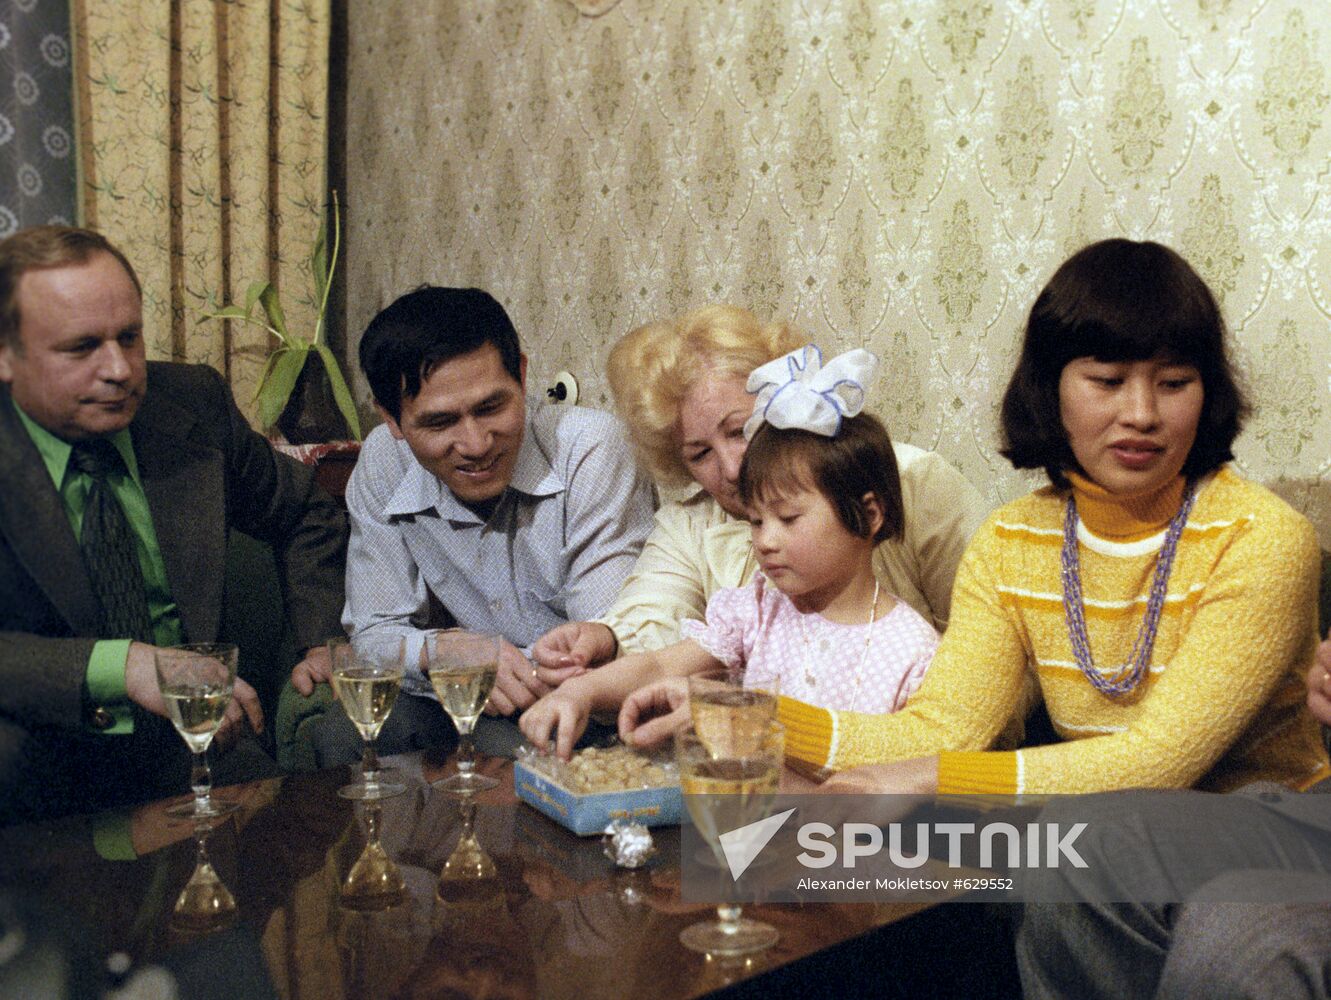 Viktor Gorbatko and Phạm Tuân with their families